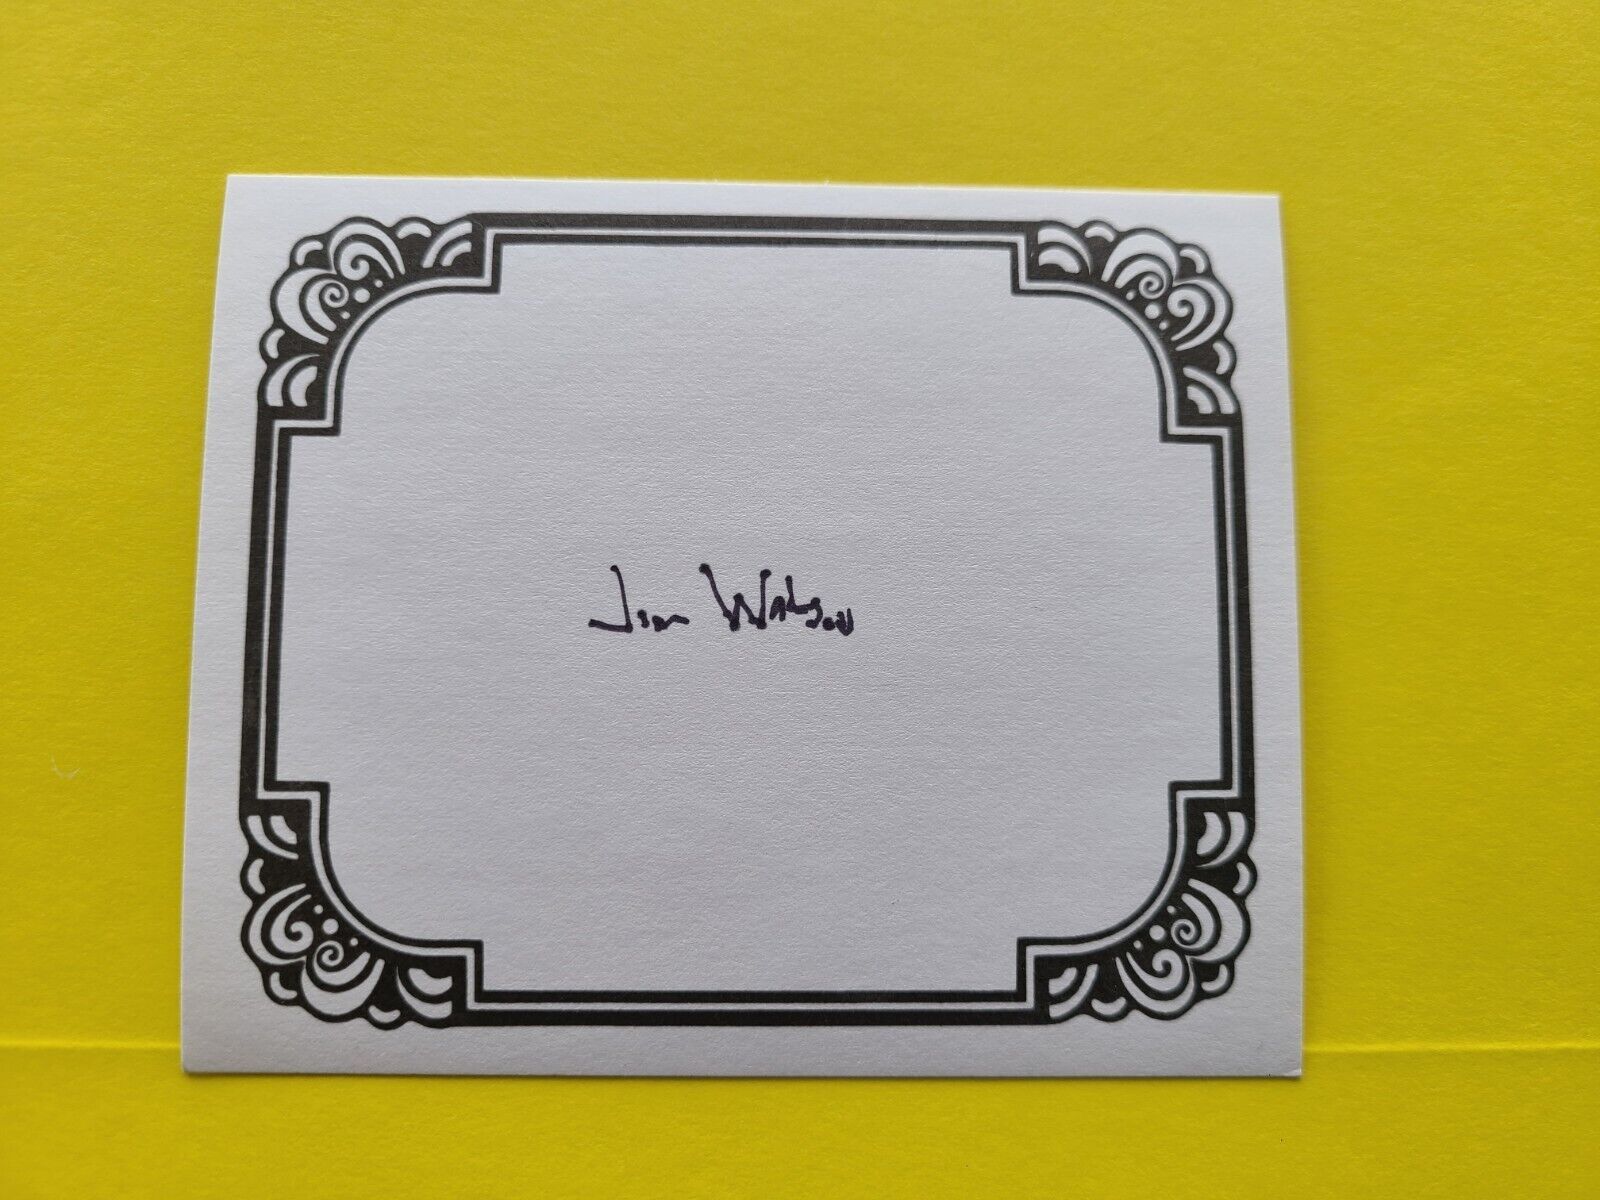 James D. Watson   DNA Nobel Prize, signed autograph, bookplate   No Inscription